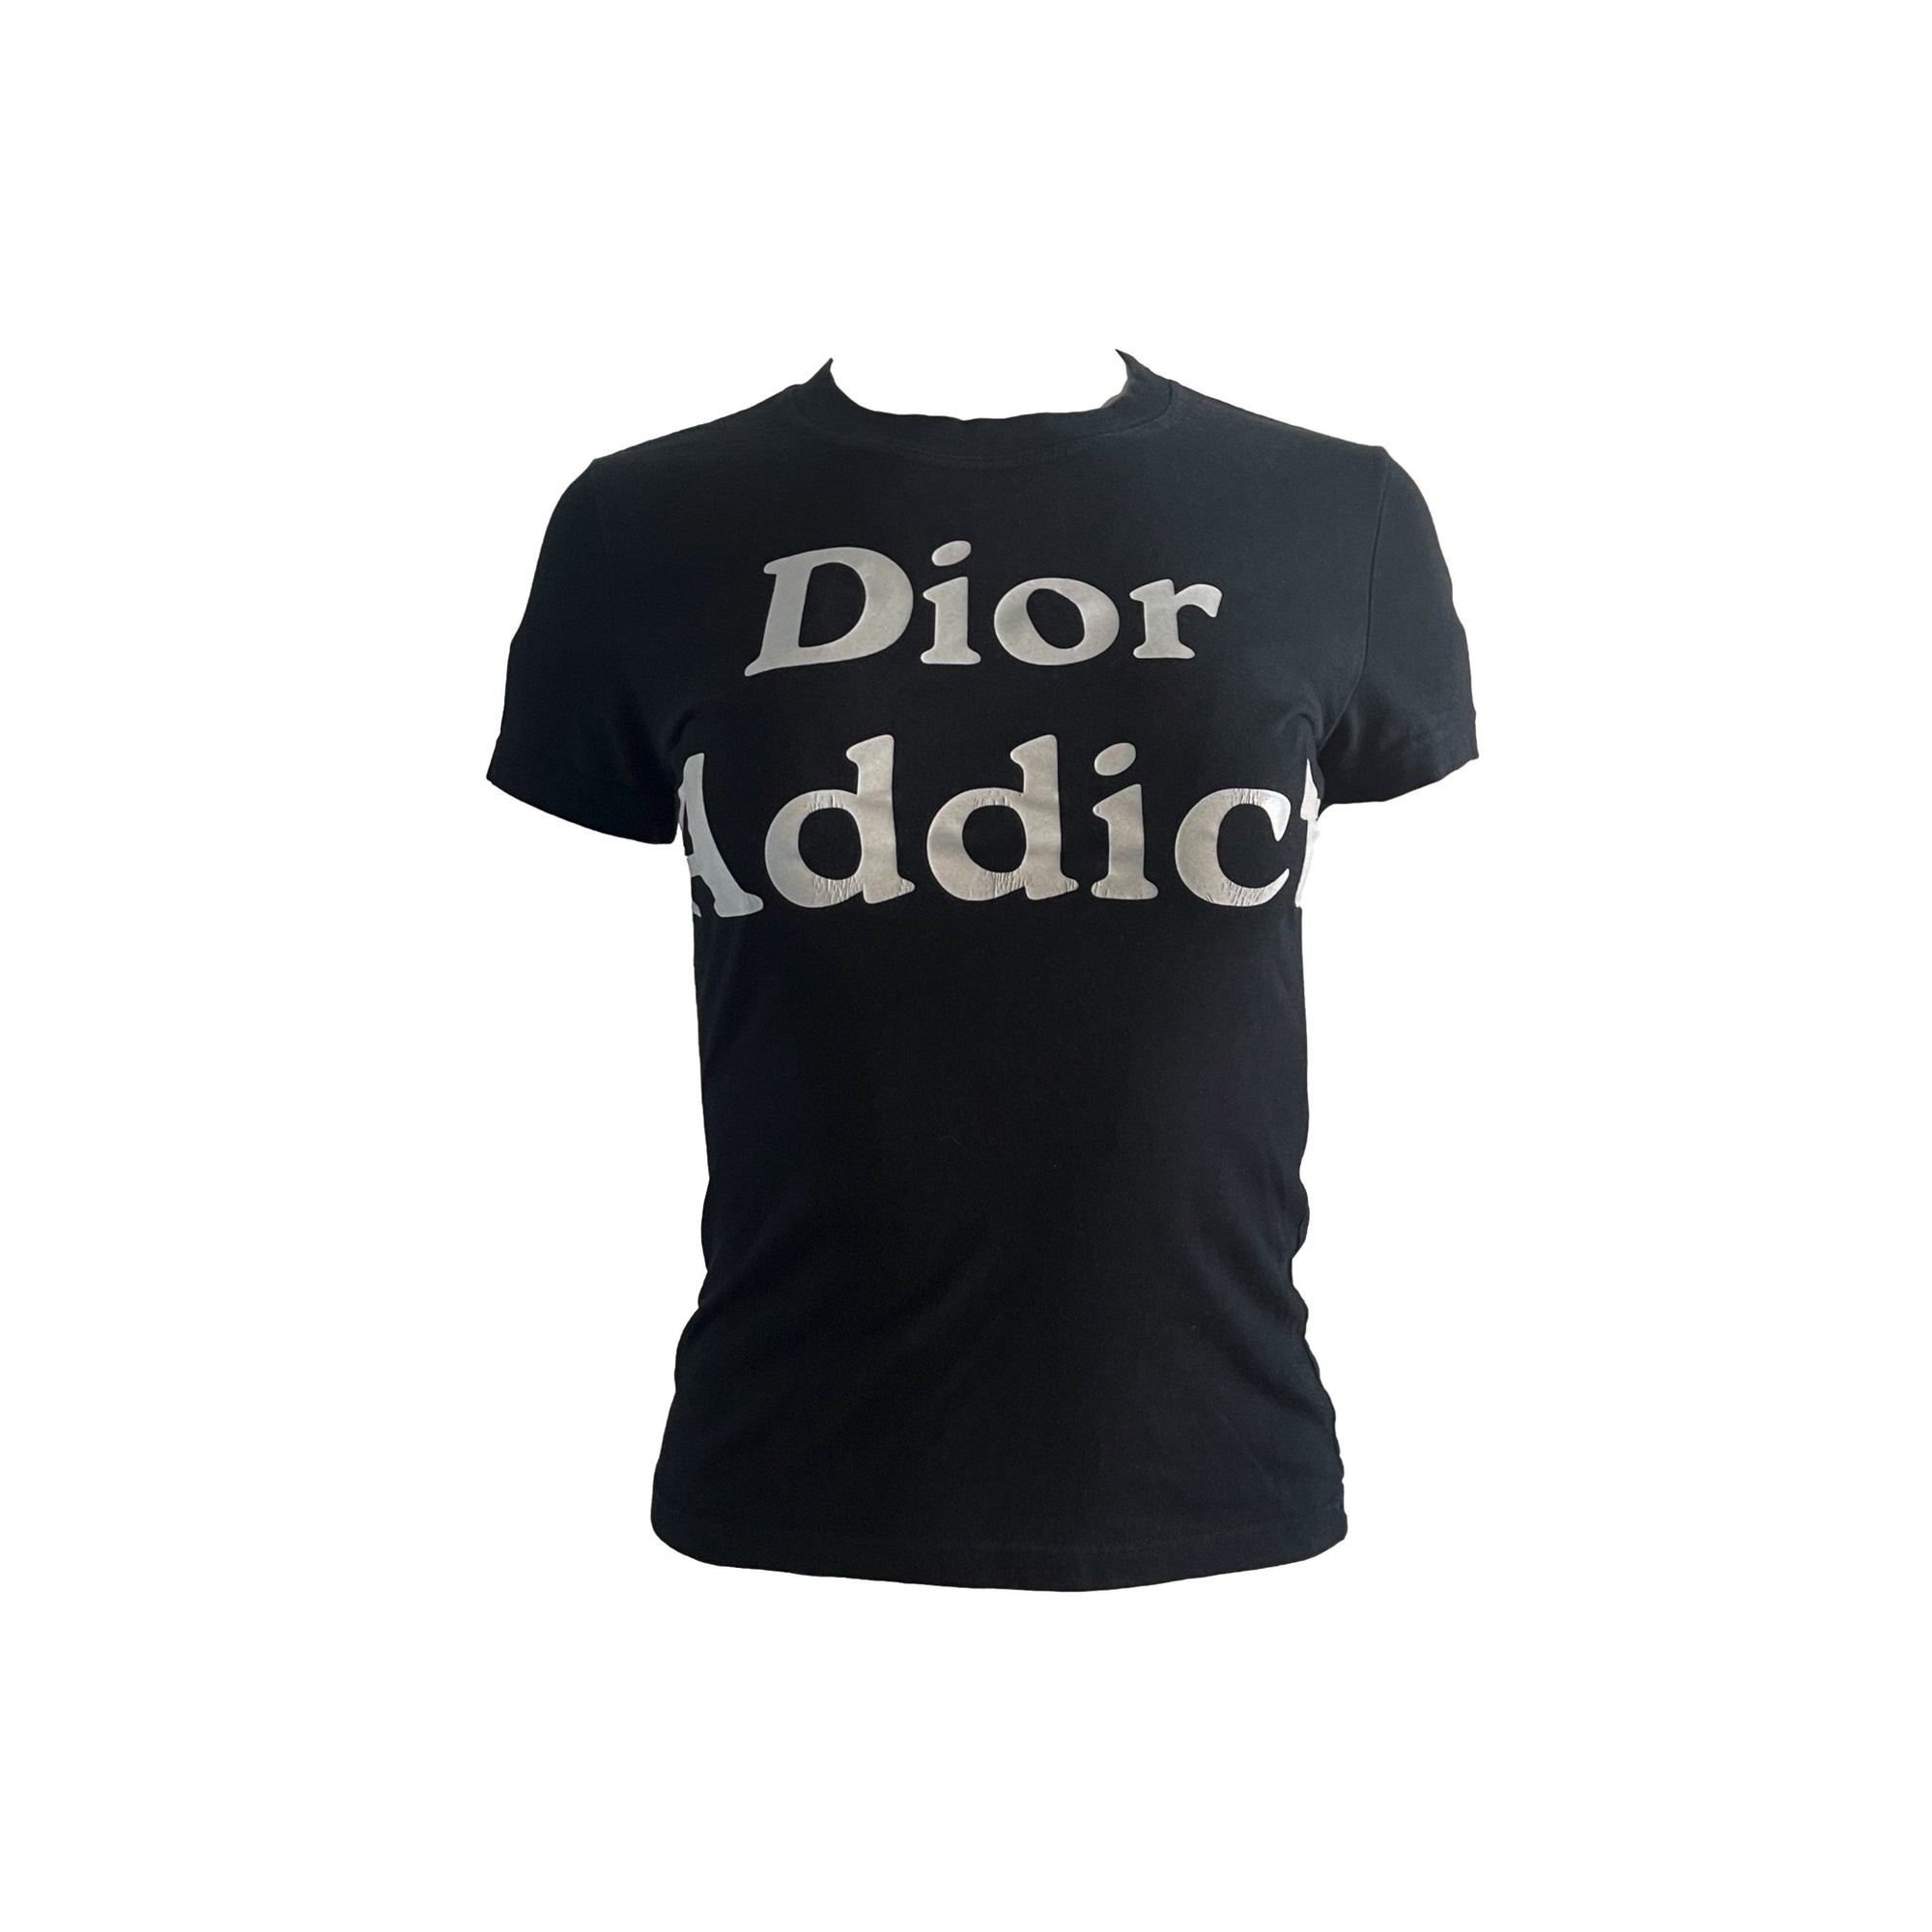 Dior Black Addict T-Shirt - Apparel